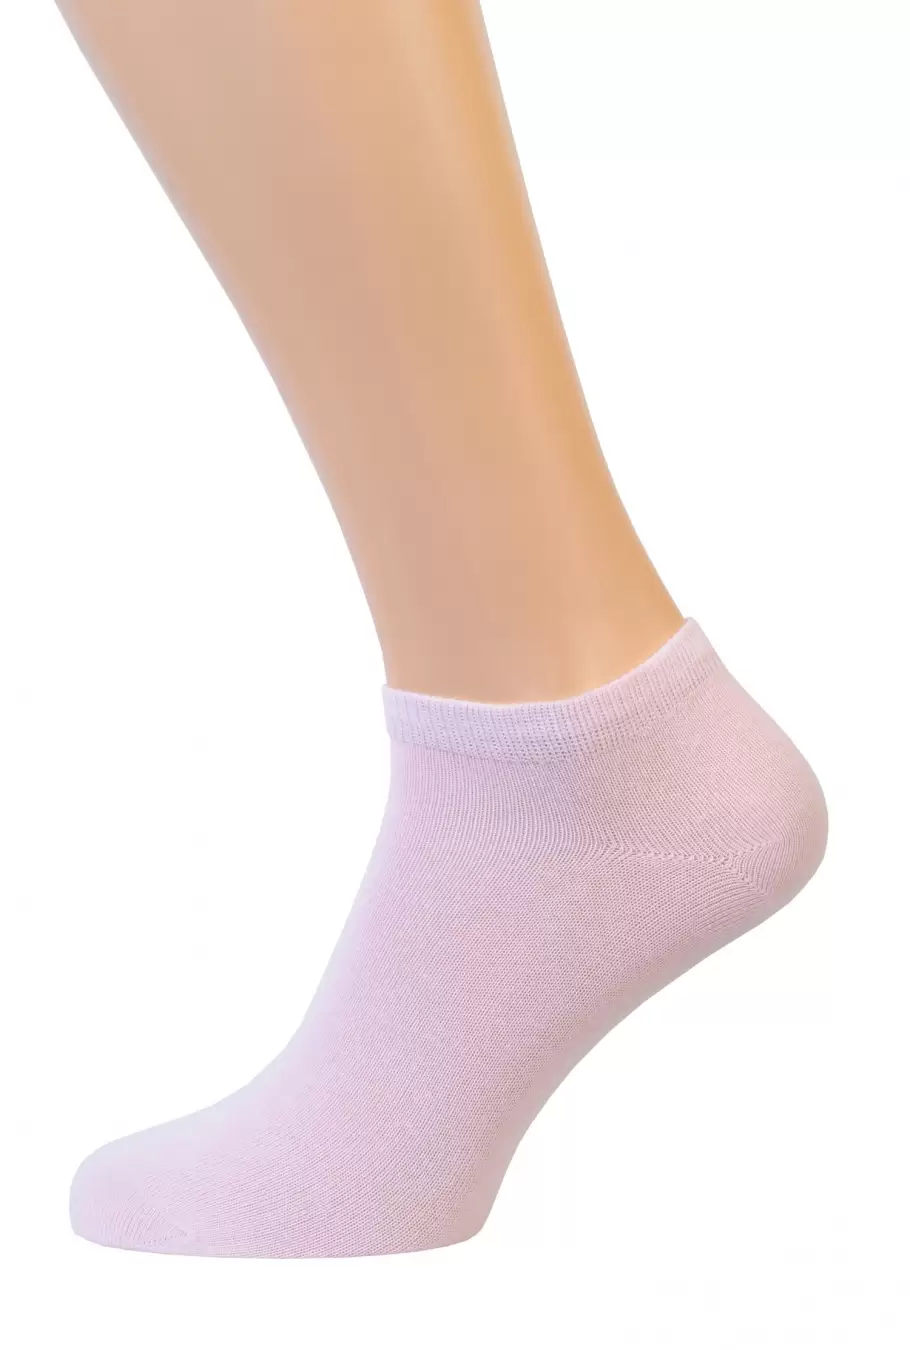 Pingons 8A7, женские носки (изображение 1)